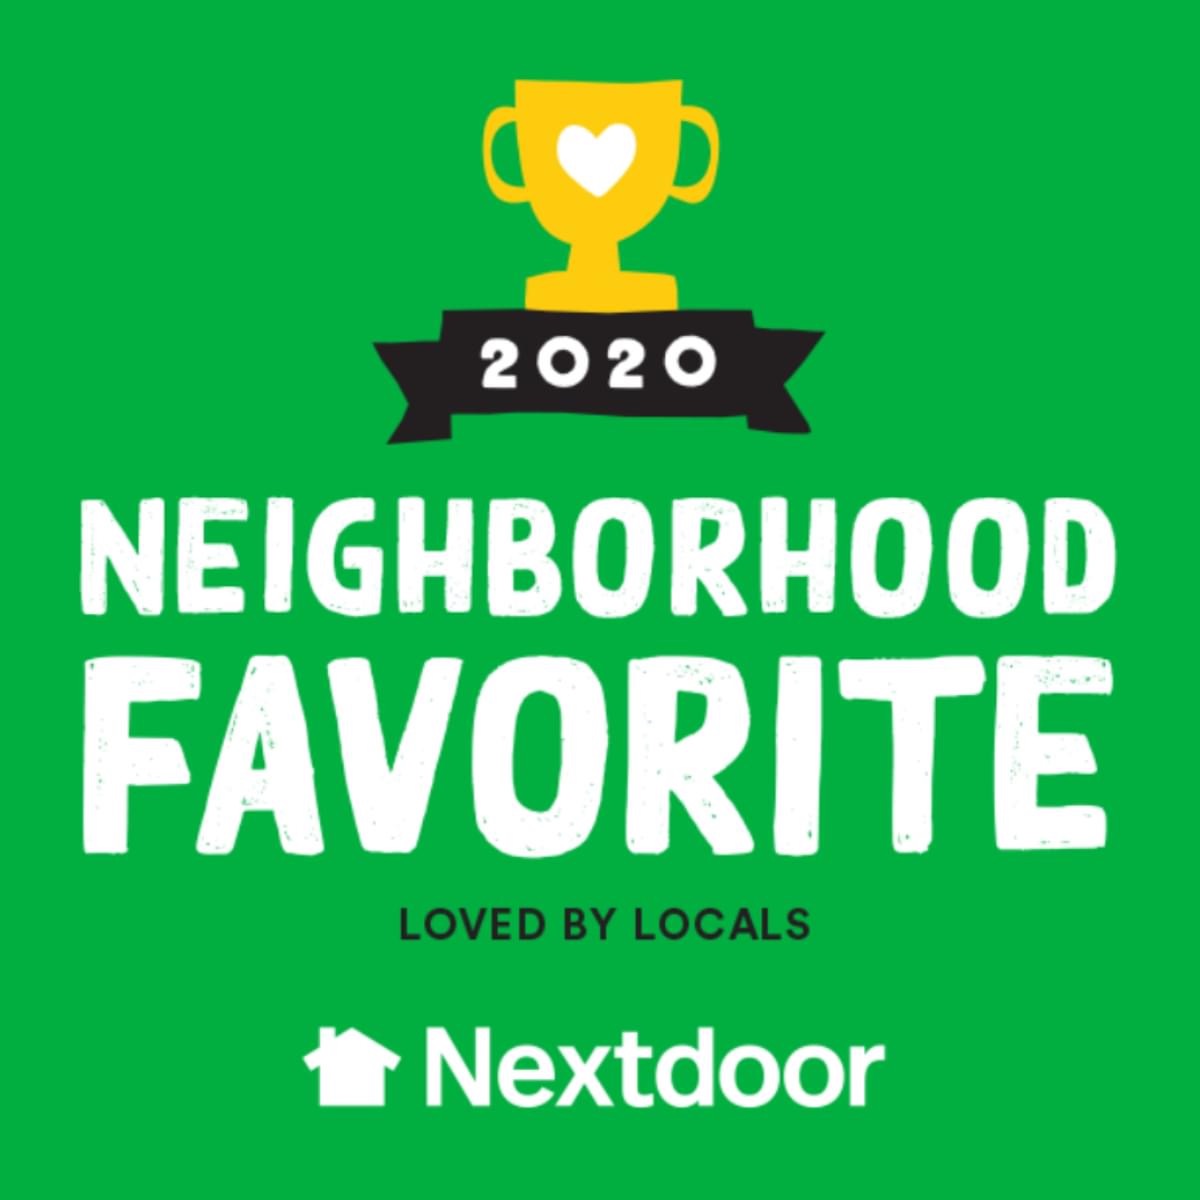 Neighborhood Favorite logo and illustration